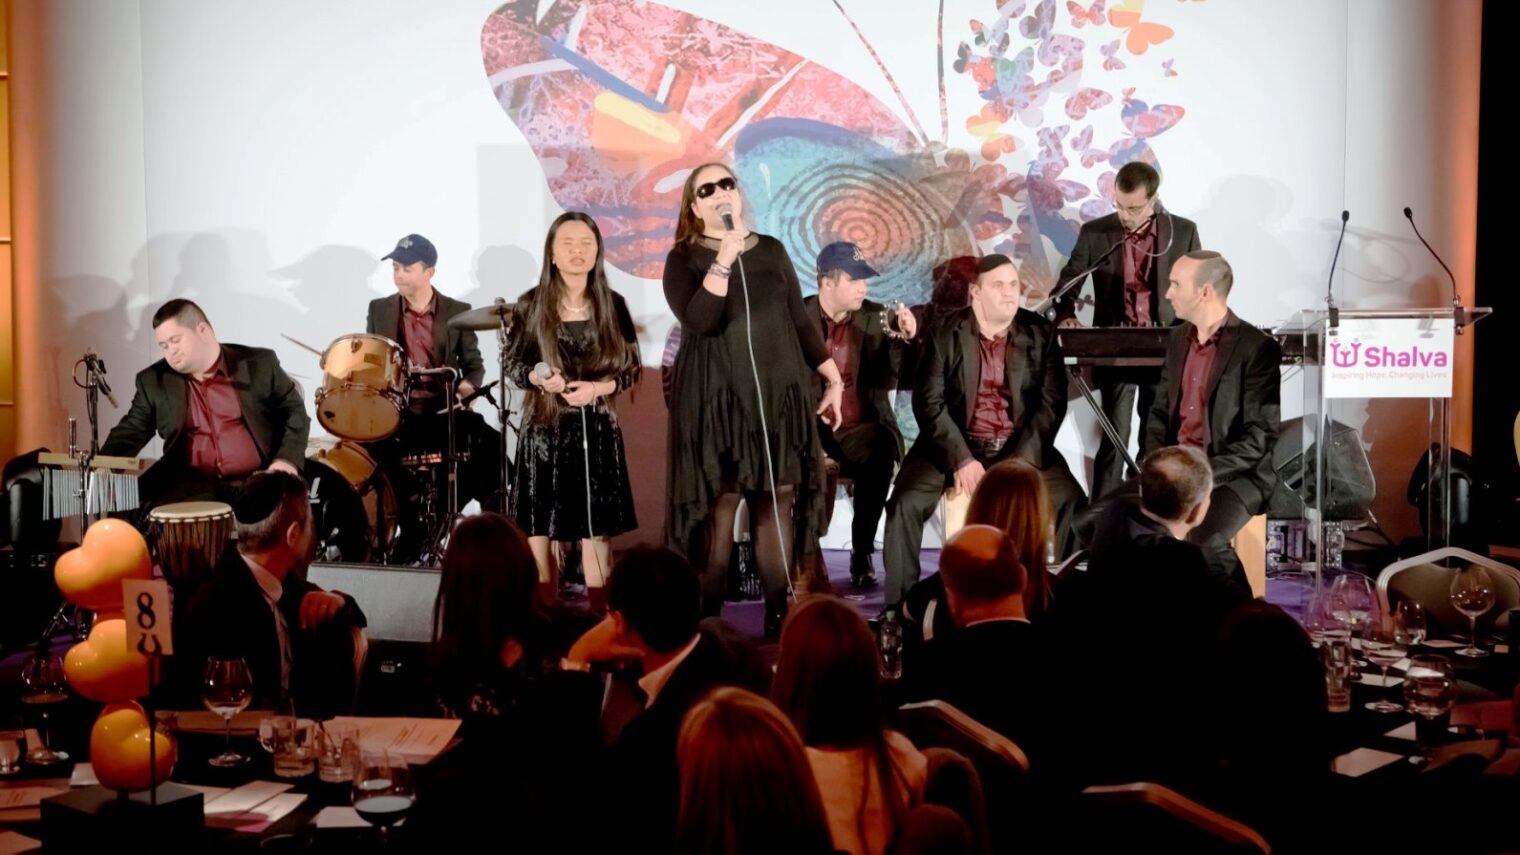 The Shalva Band performing at a fundraiser in November 2018. Photo: courtesy